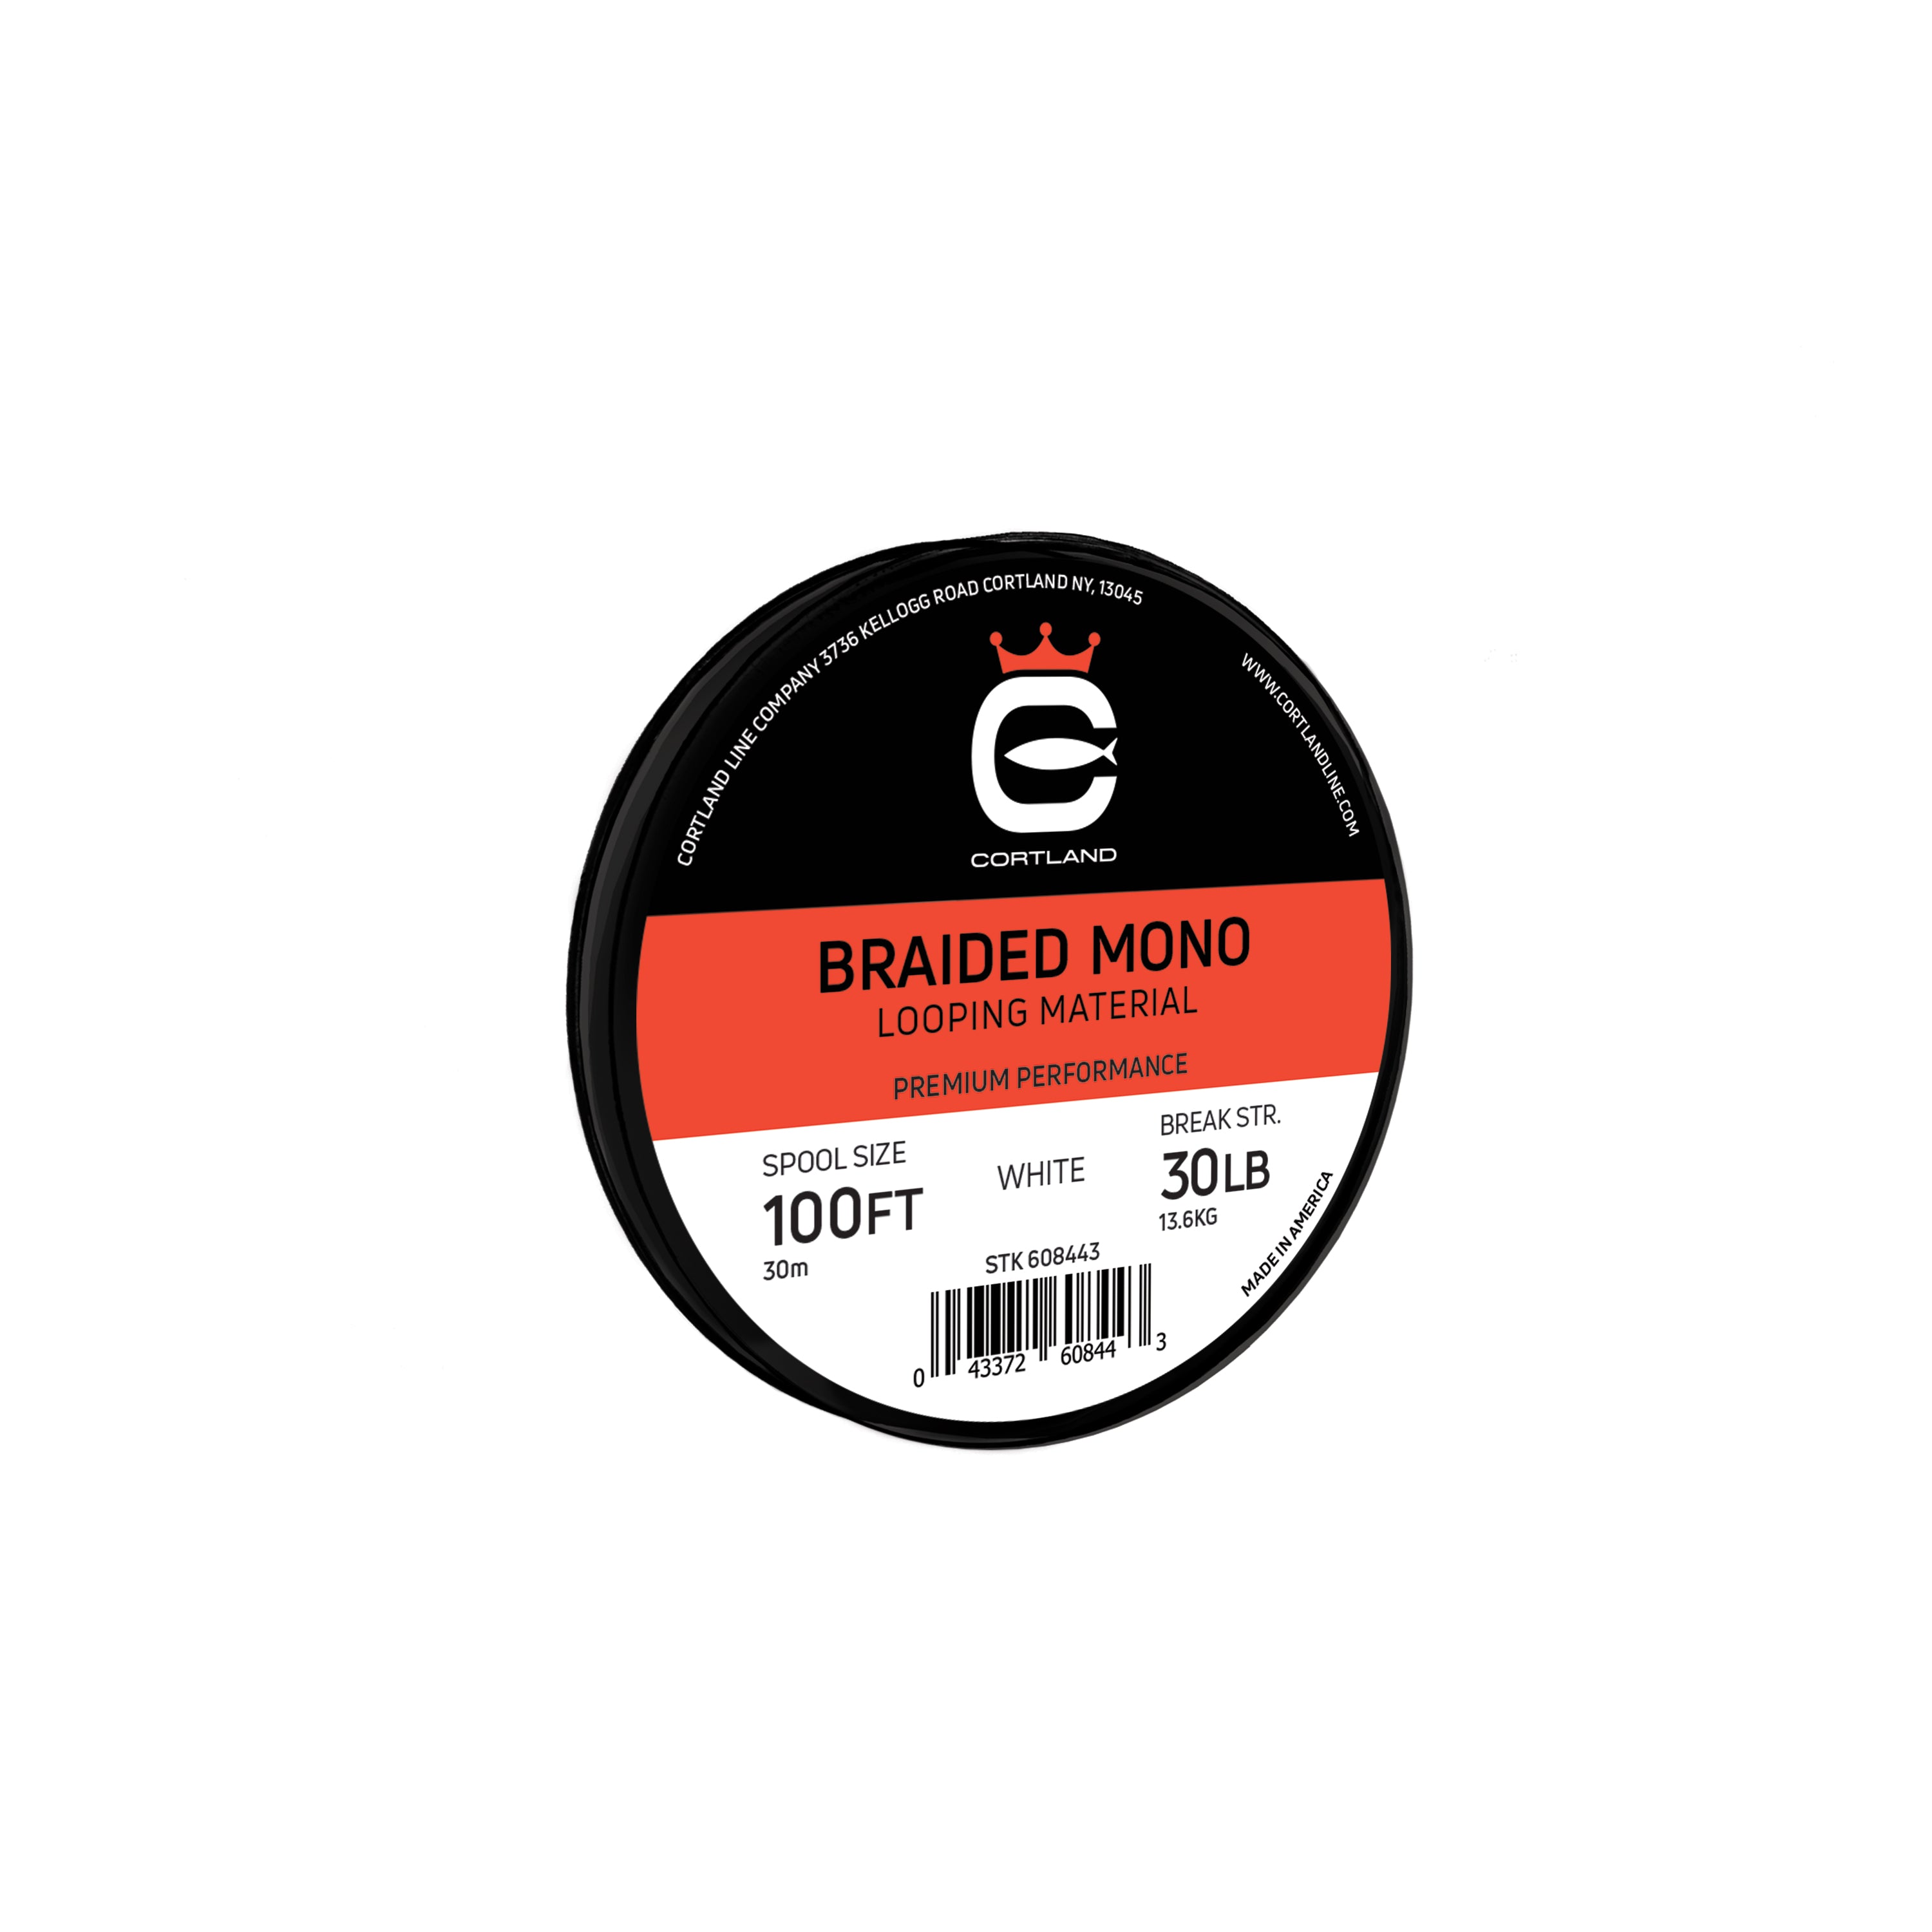 Cortland Braided Mono Looping Material - 50lb